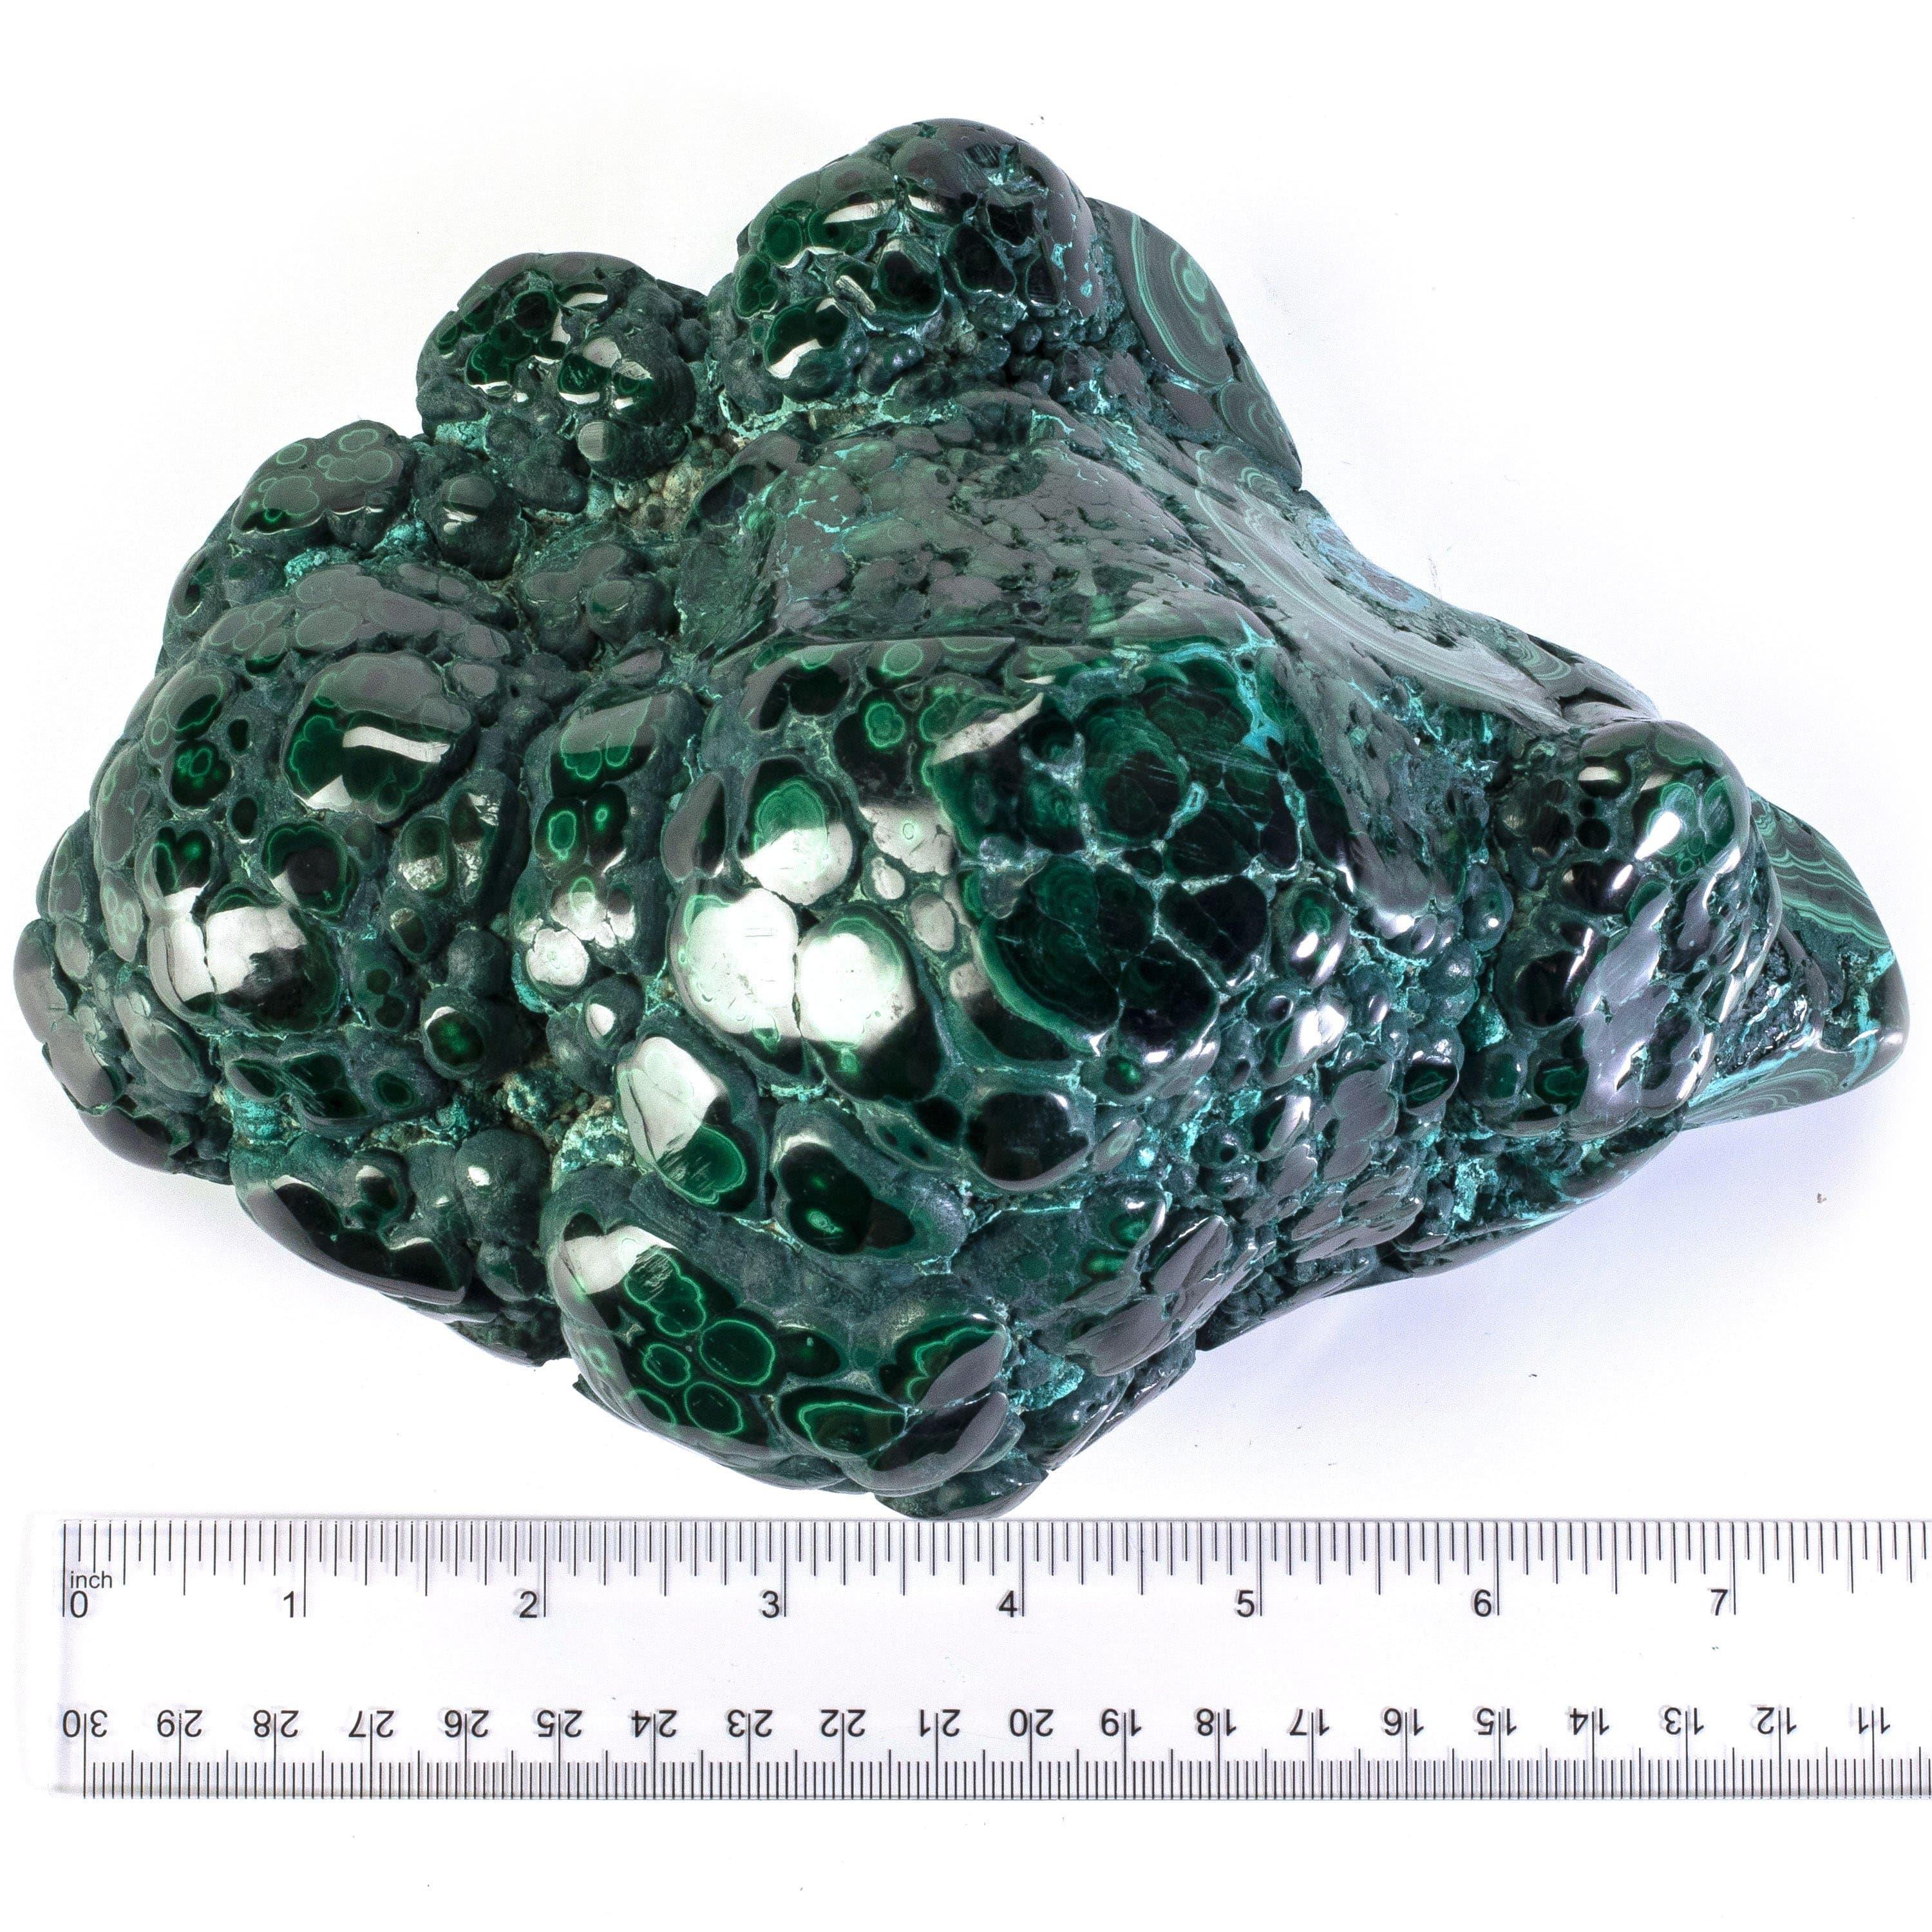 Kalifano Malachite Rare Natural Green Malachite with Blue Chrysocolla Freeform Specimen from Congo - 2.9 kg / 6.4 lbs MAC2800.001